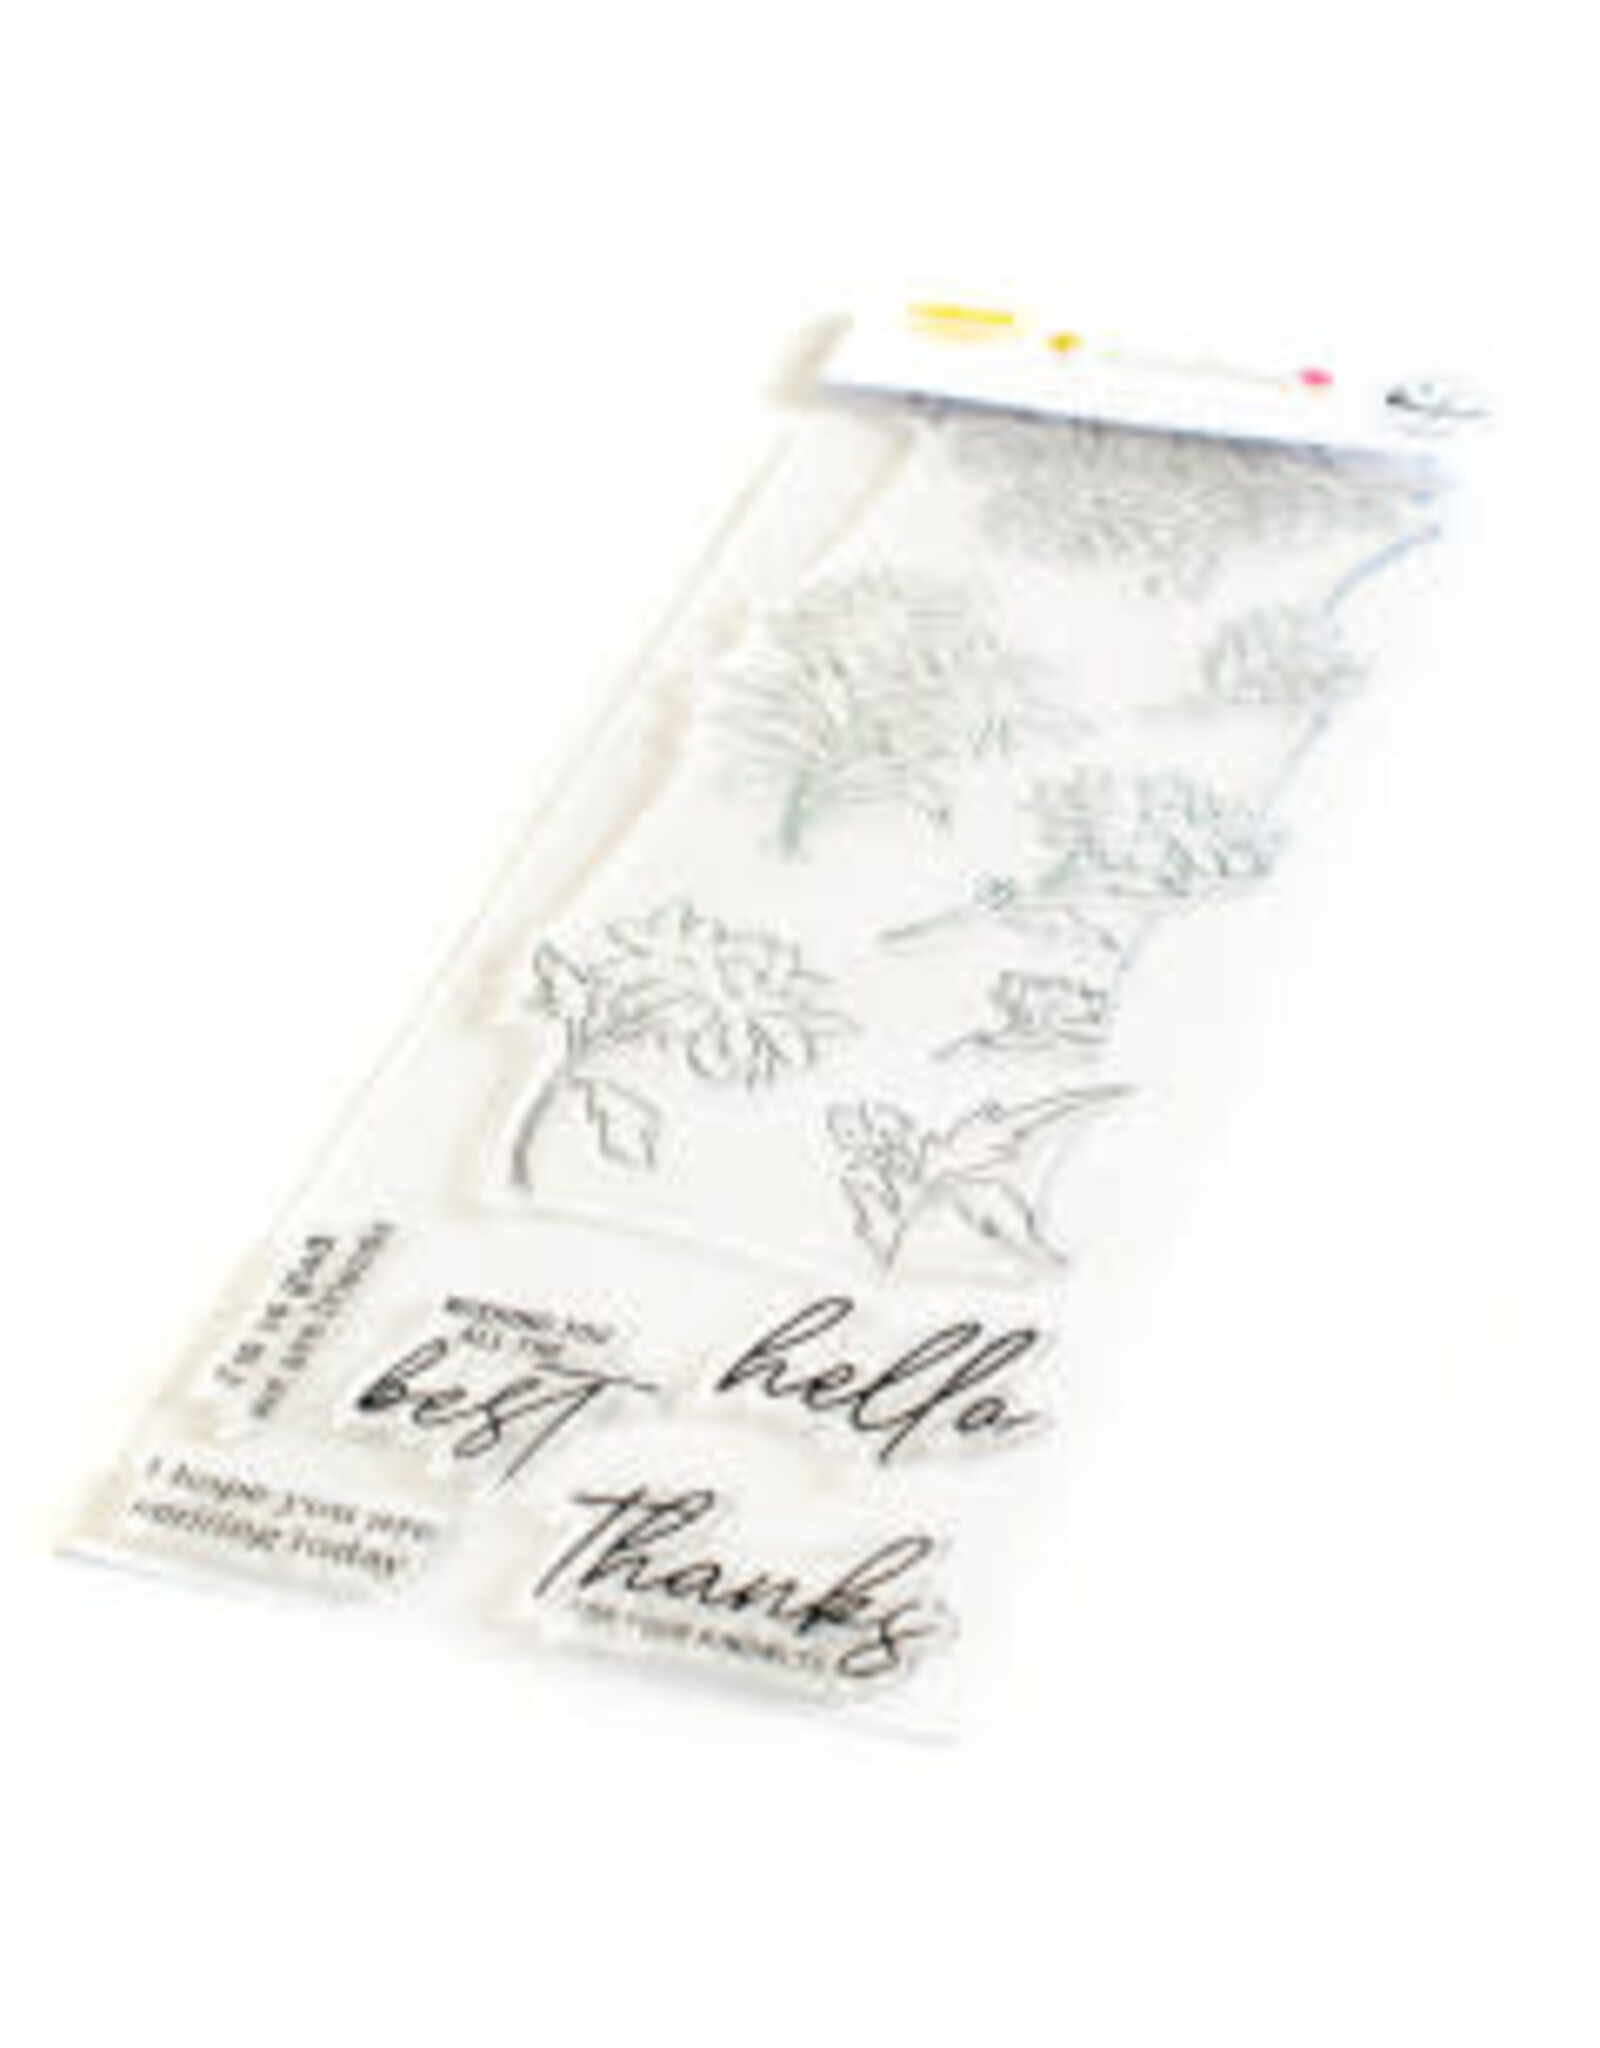 PINKFRESH STUDIO Chrysanthemun Bundle (stamp,die and stencil)